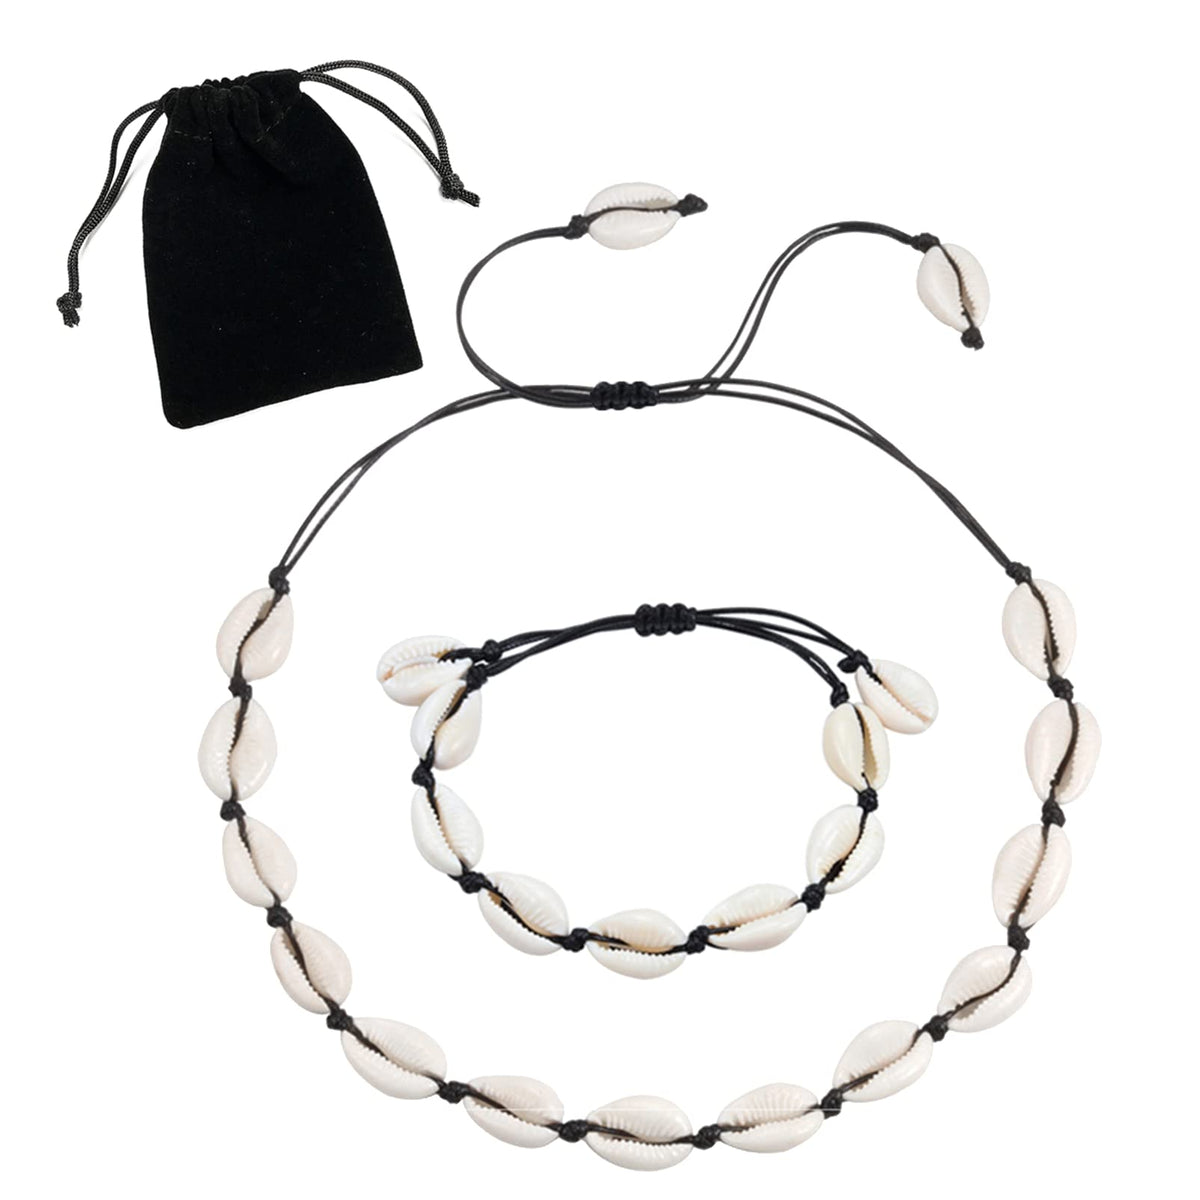 Shell Necklace Bracelet, Natural Shell Choker Necklace and Bracelet Set, 2Pcs Summer Beach Necklace and Bracelet for Women, Girls and Man (Black)